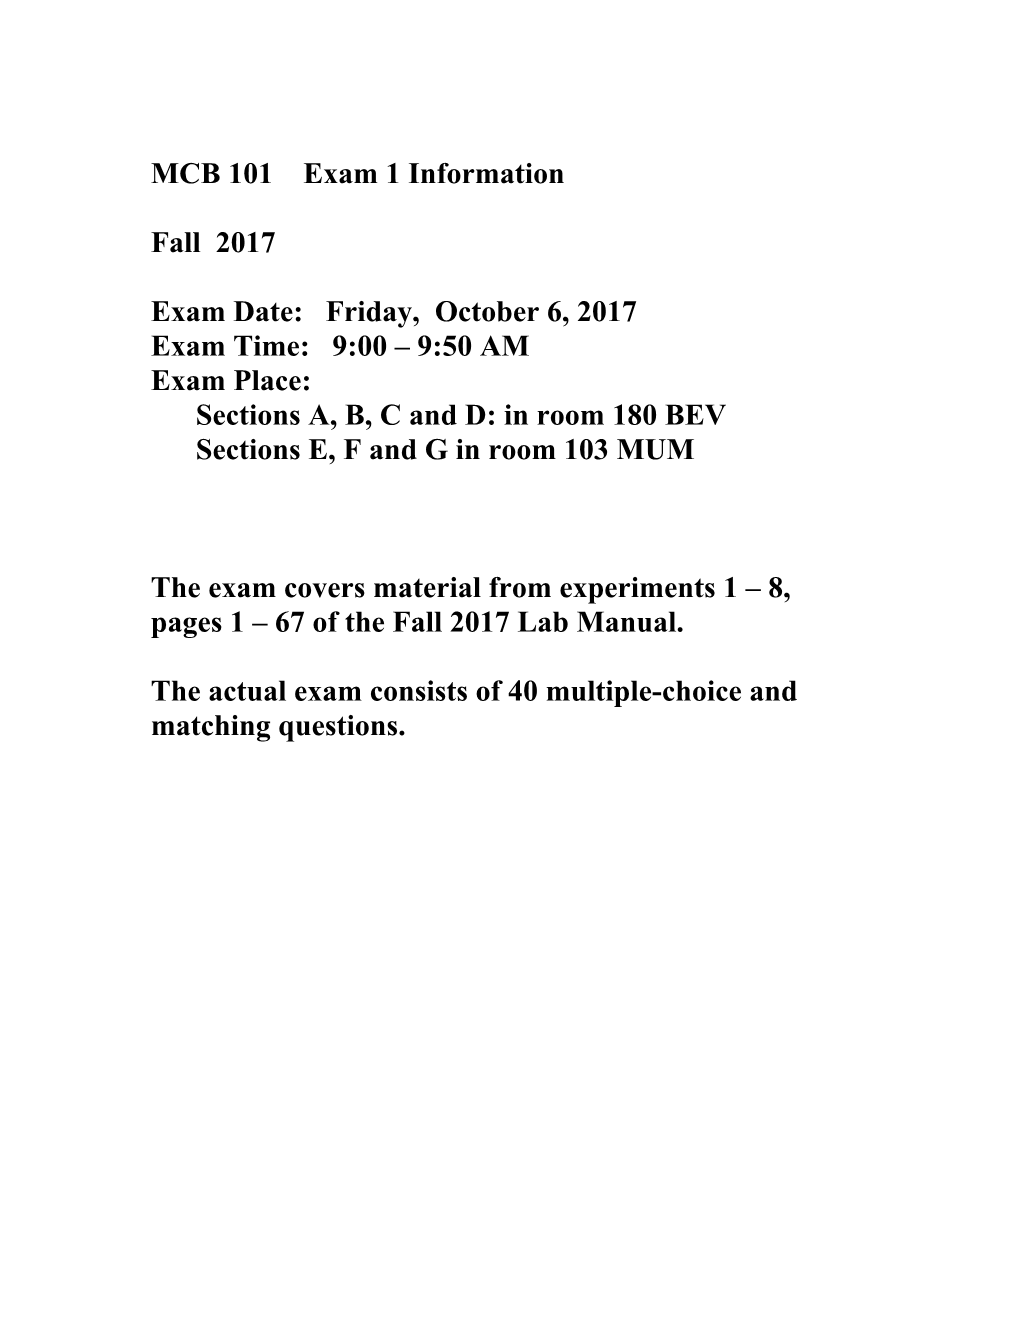 MCB 101 Exam 1 Information